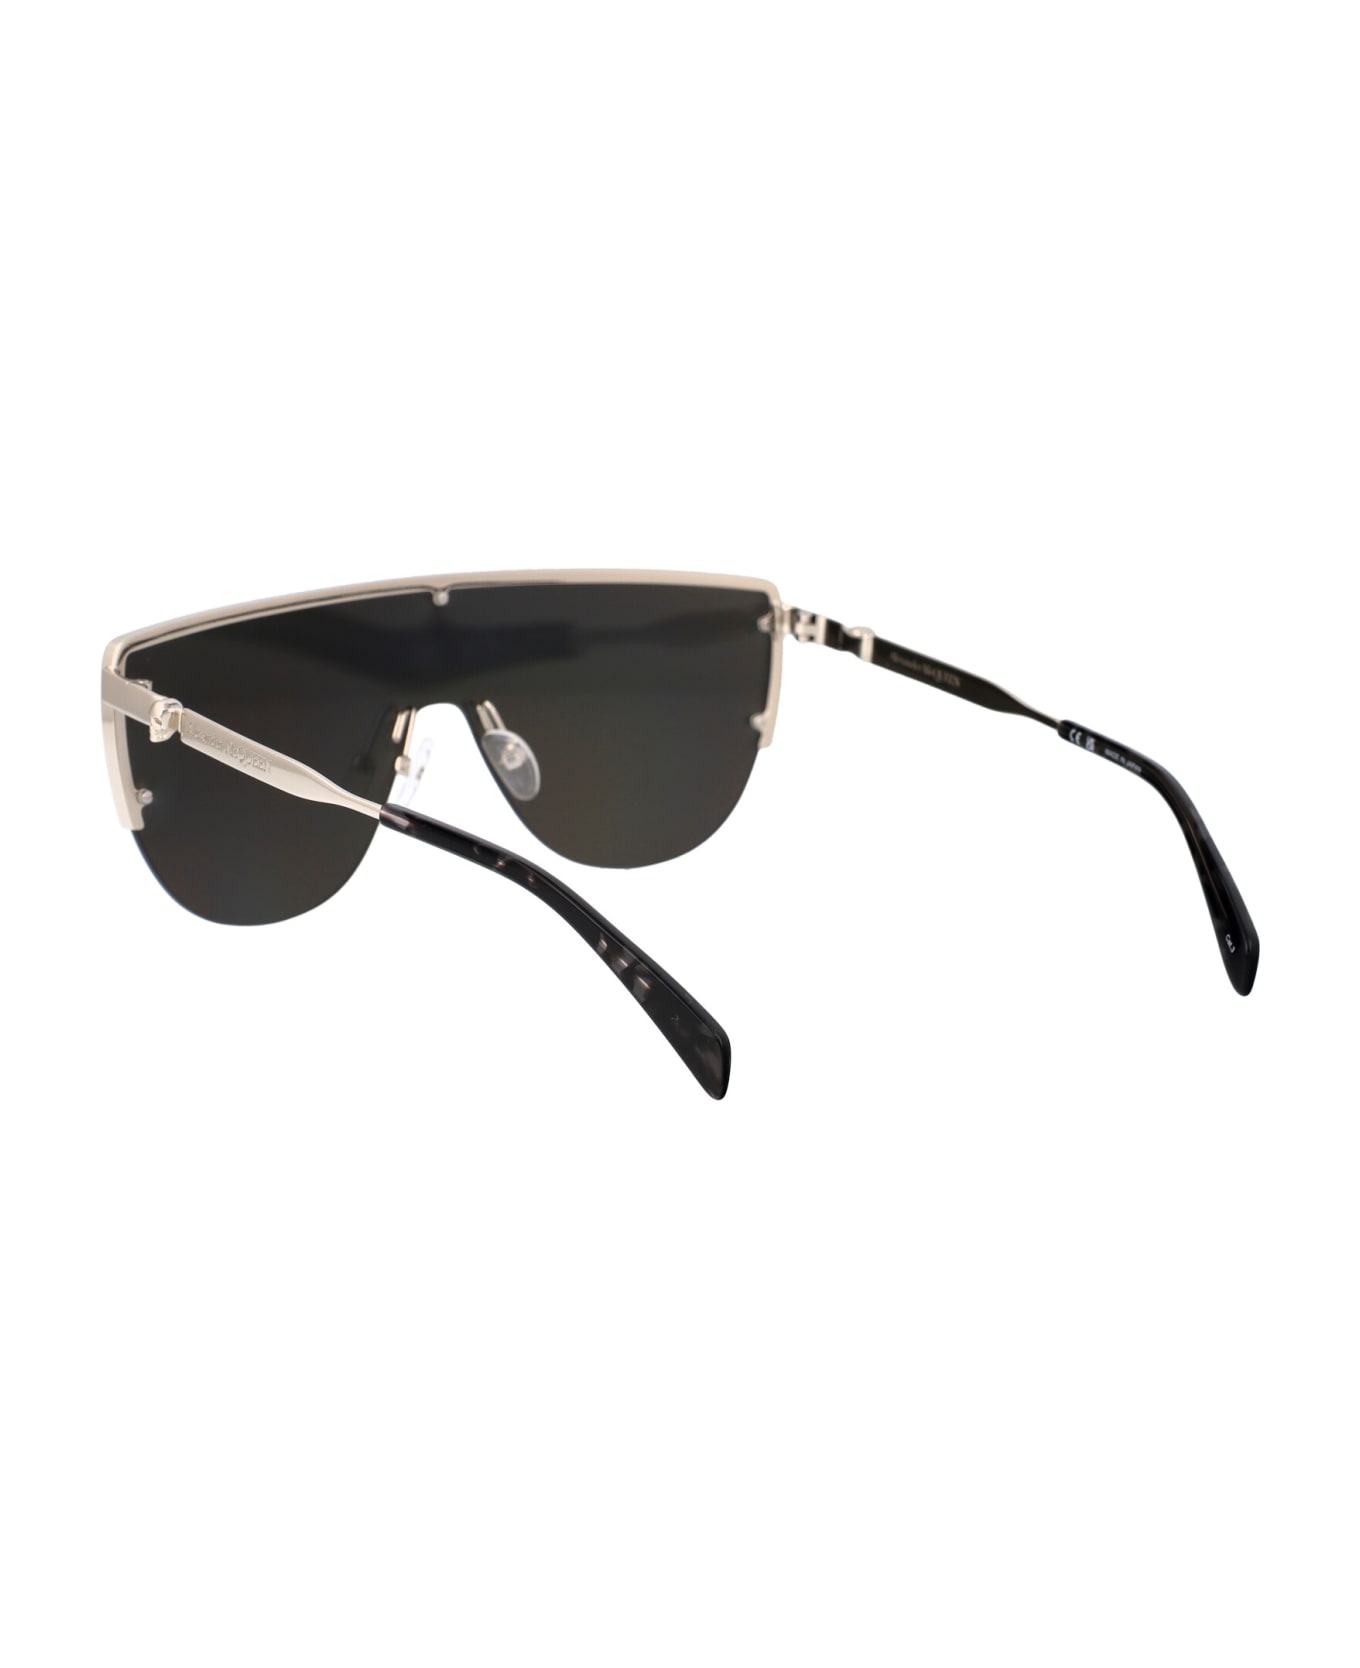 Alexander McQueen Eyewear Am0457s Sunglasses - 004 SILVER SILVER SILVER